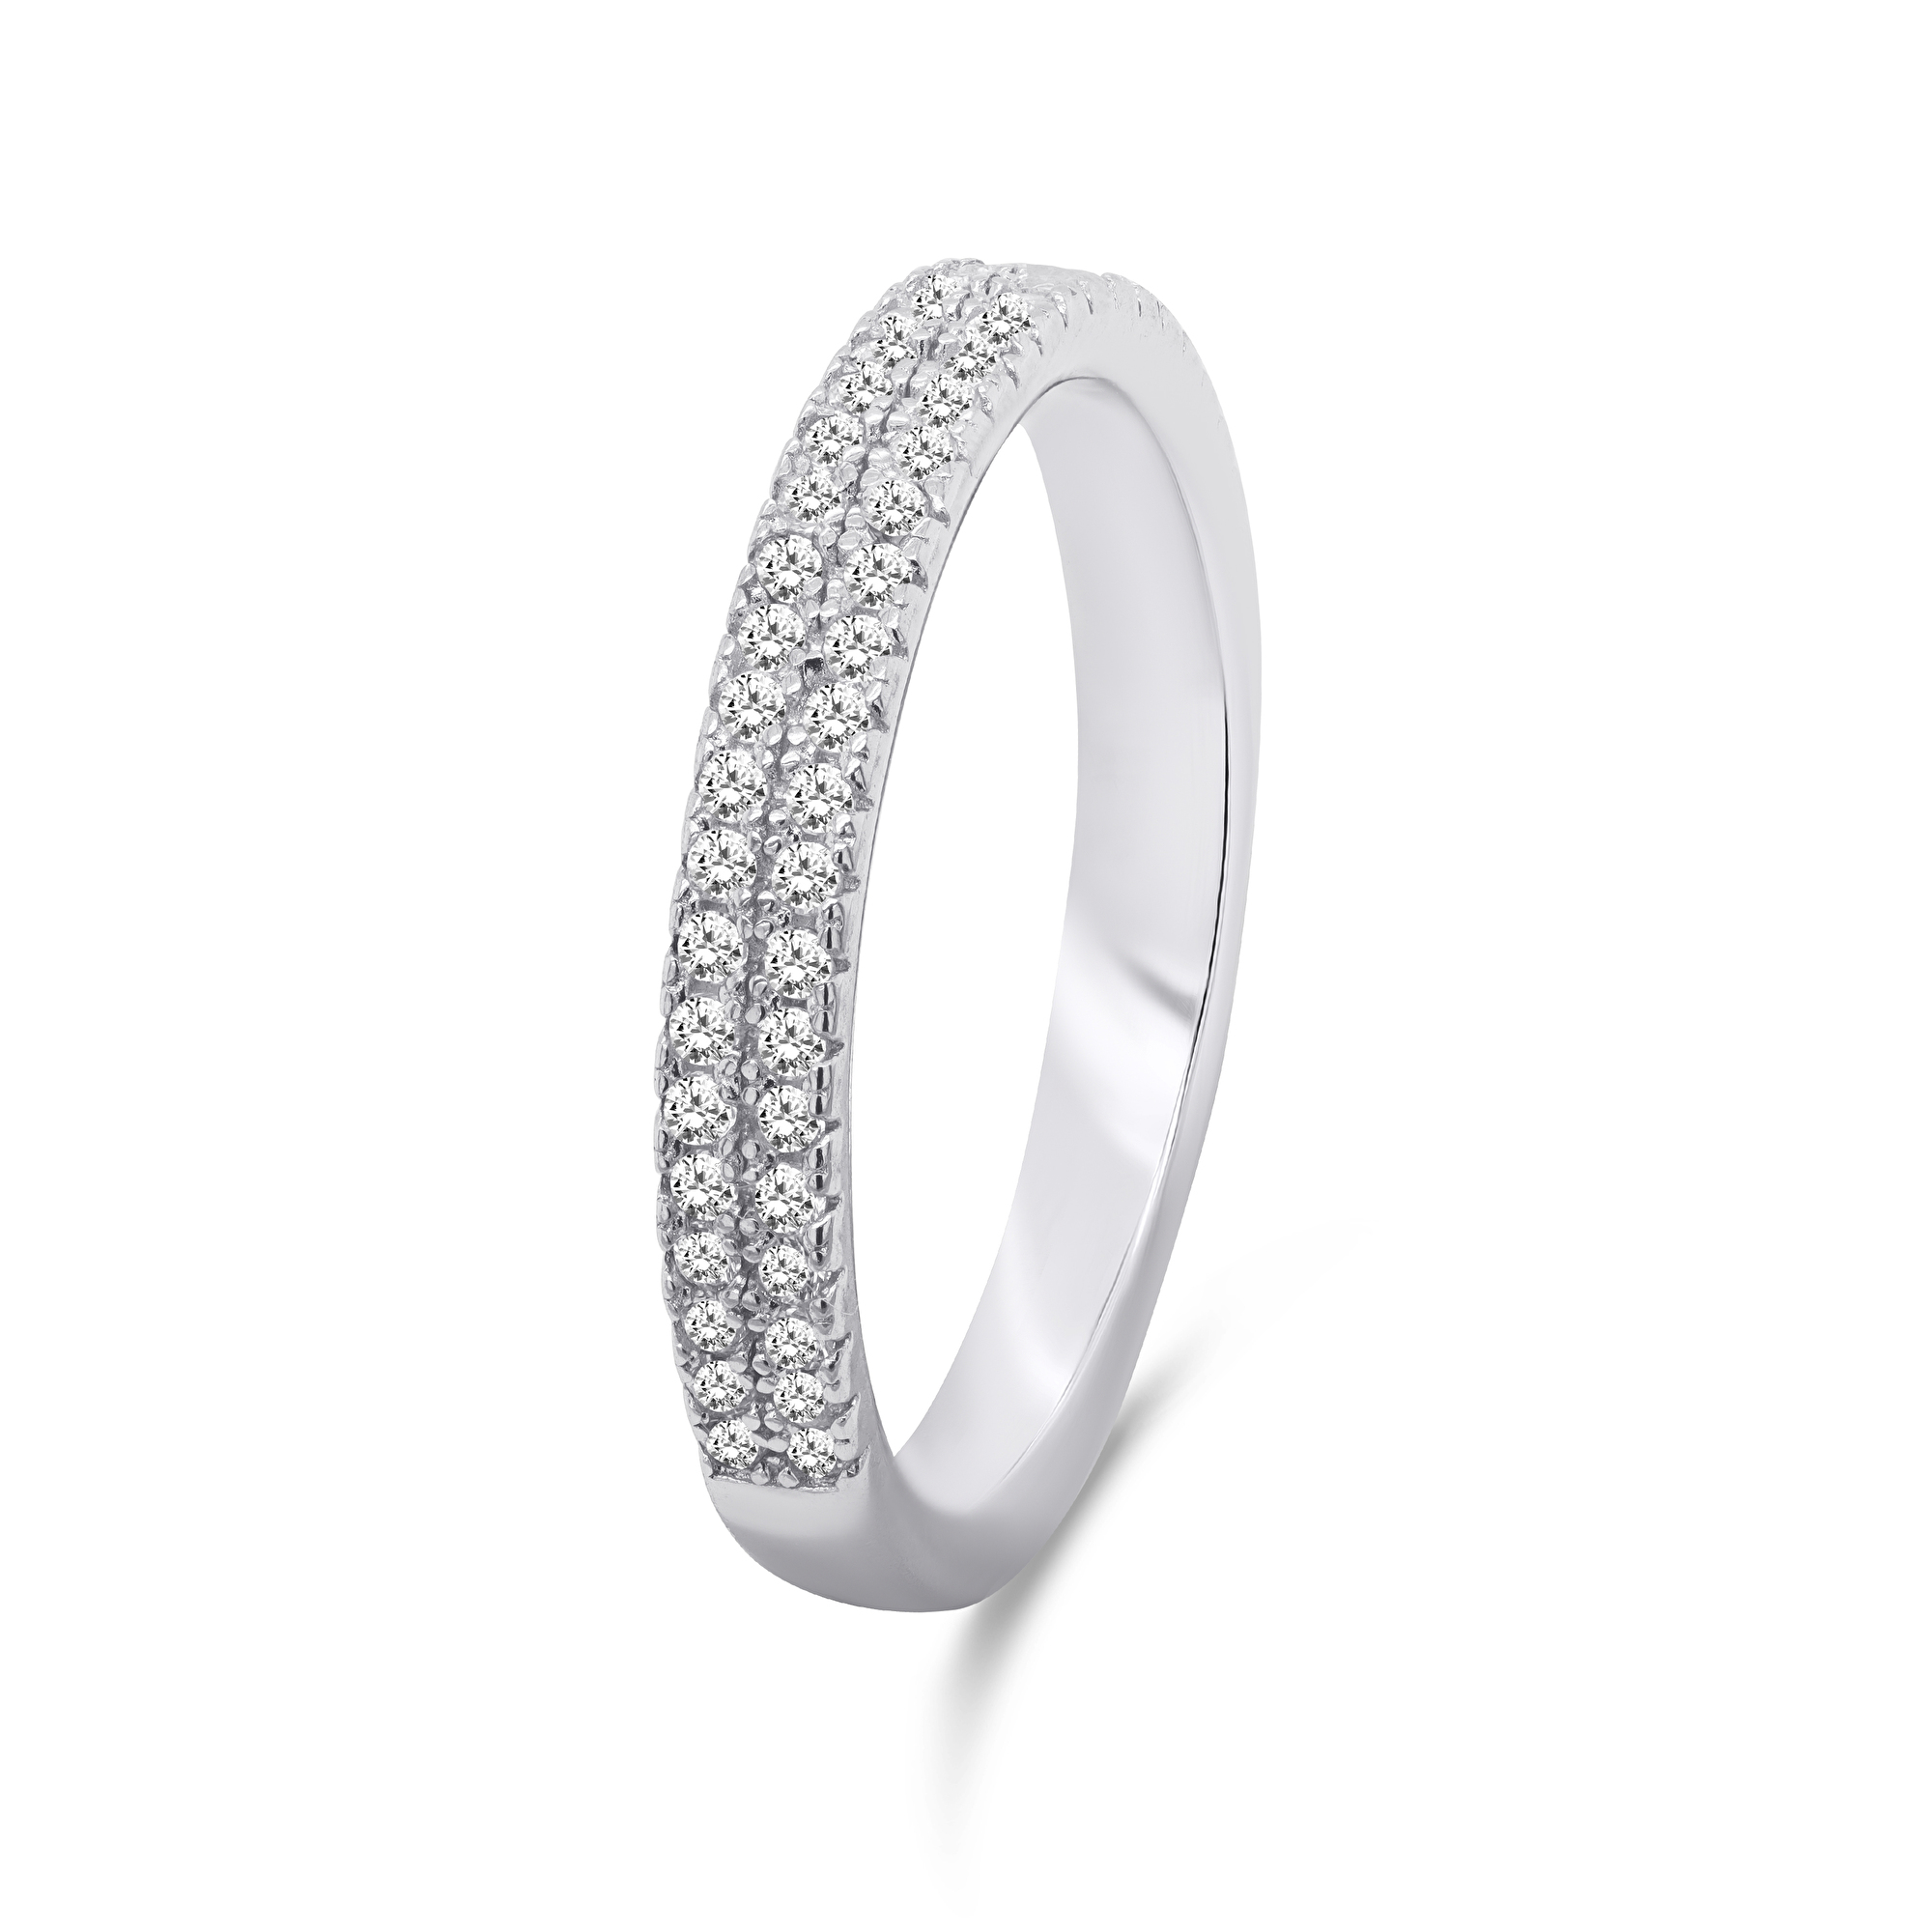 Brilio Silver Třpytivý stříbrný prsten s čirými zirkony RI059W 60 mm